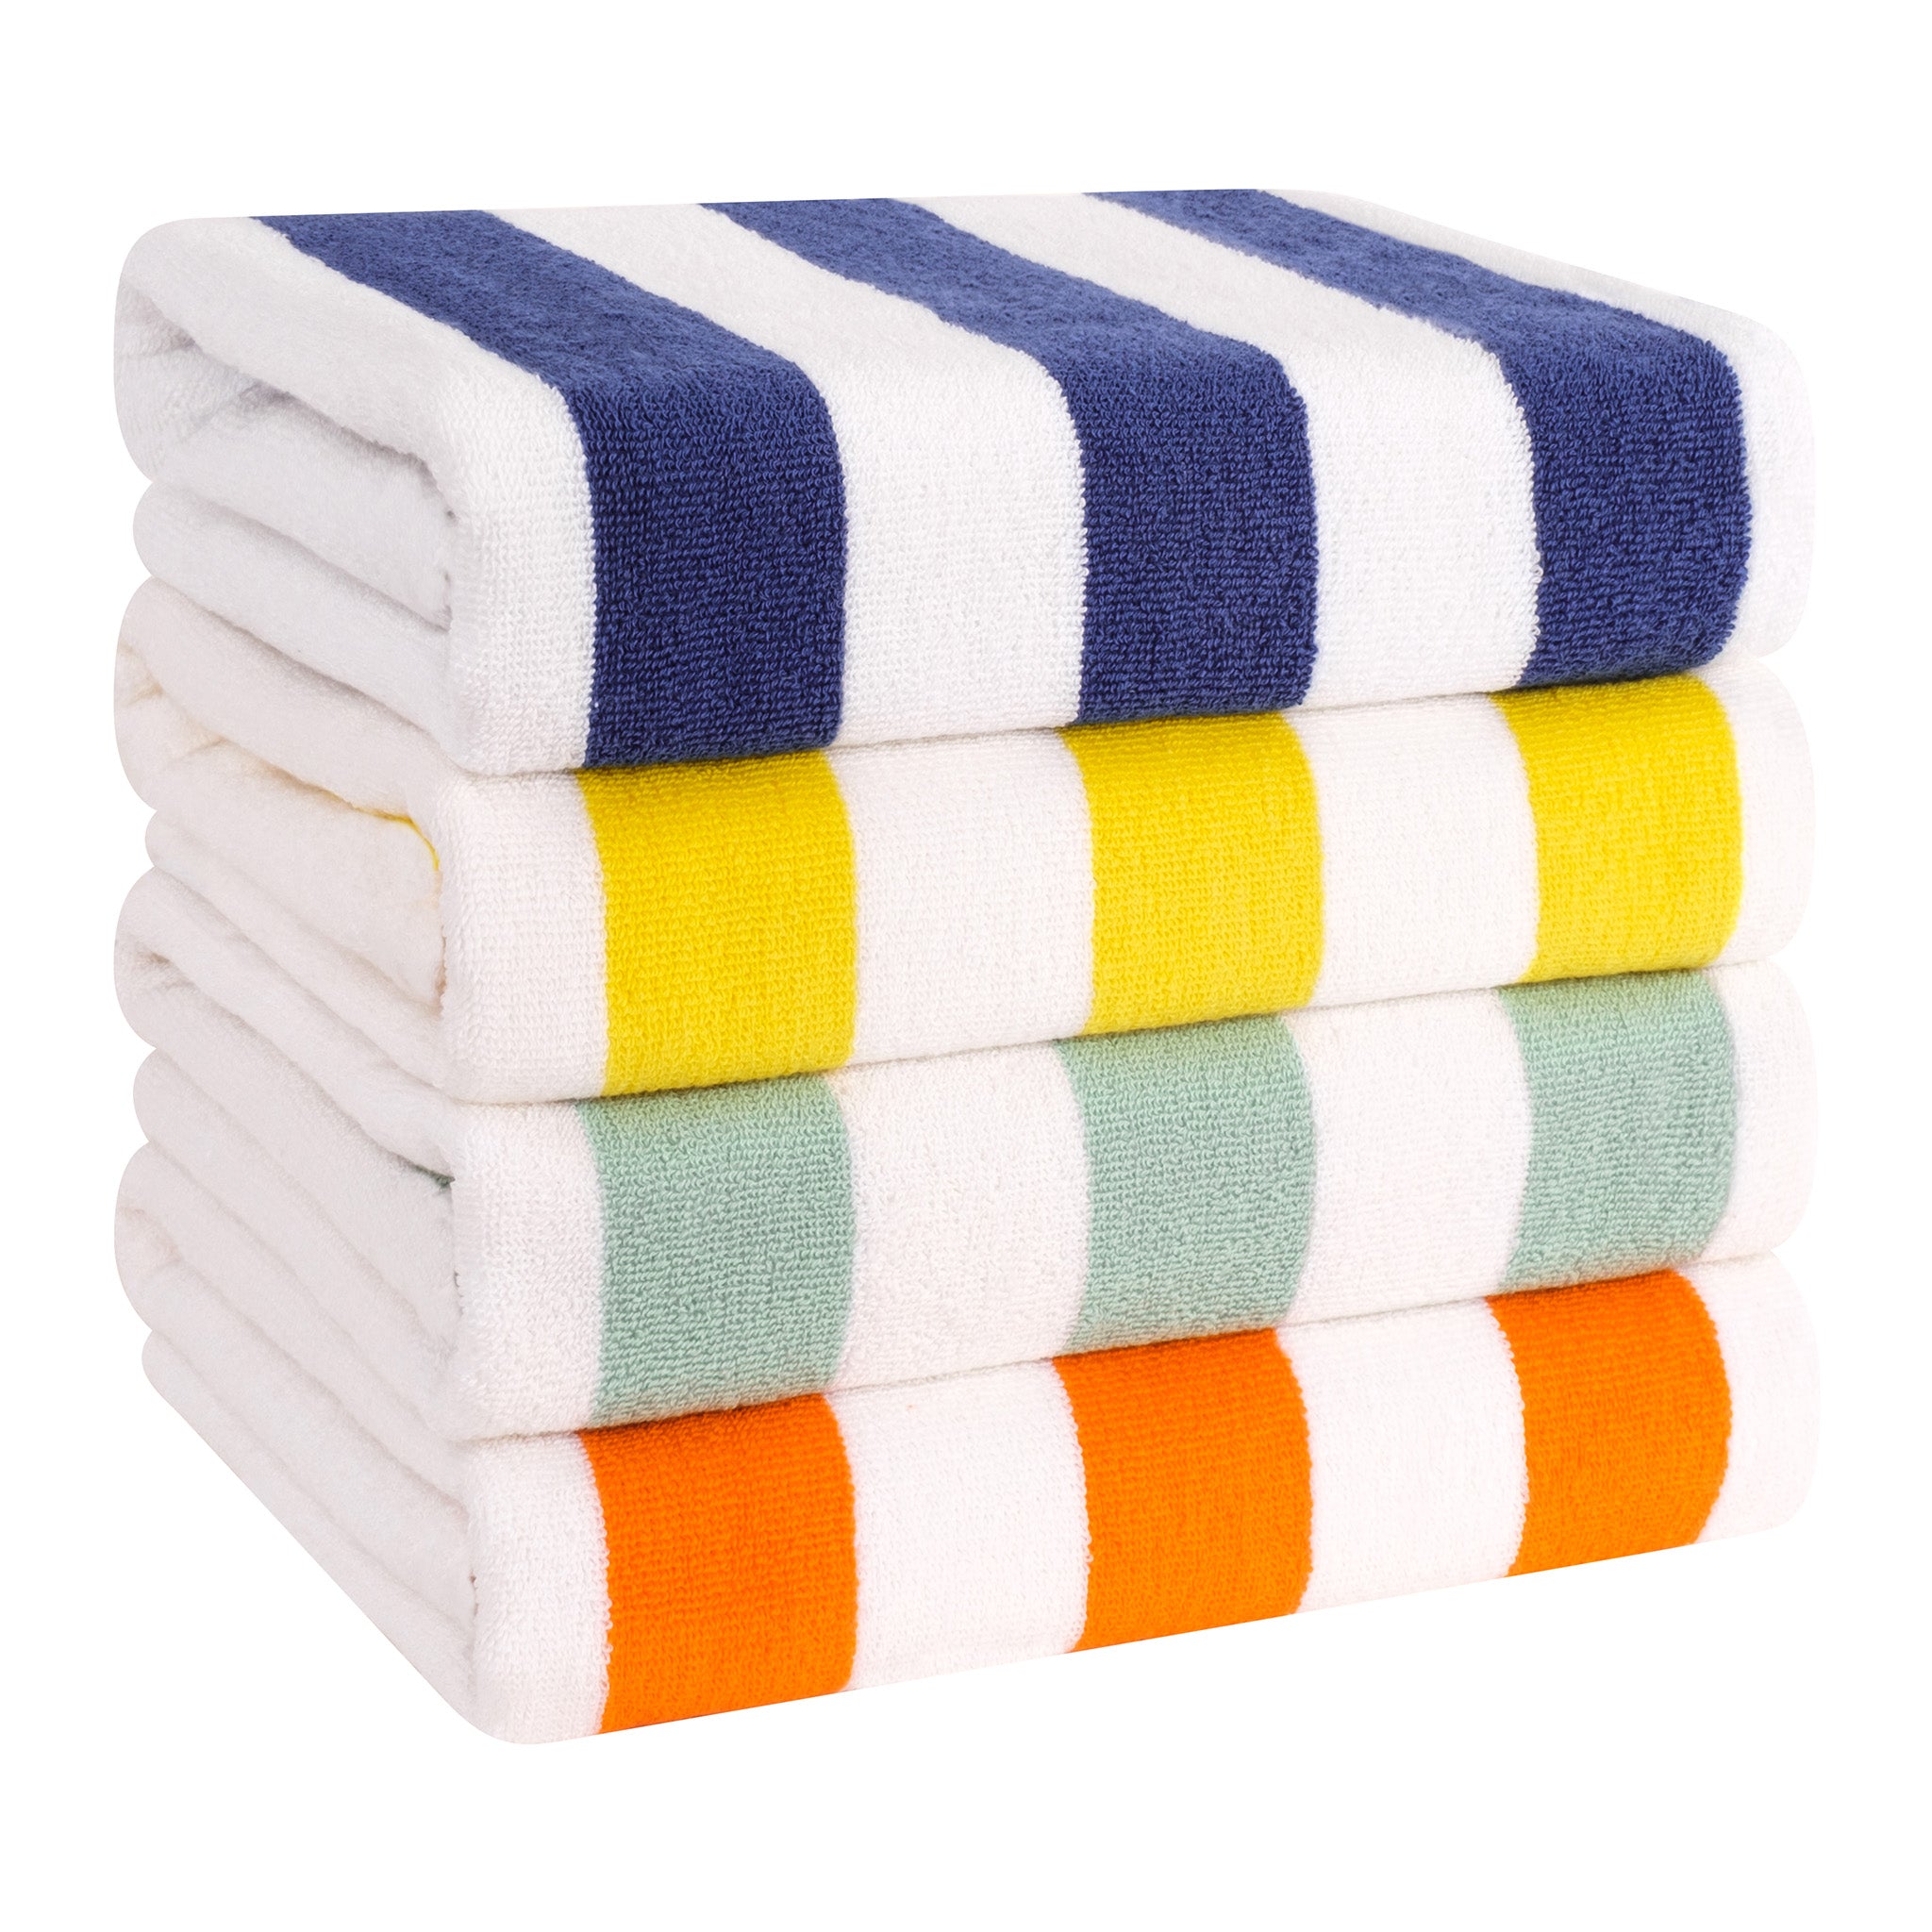 Cabana Lightweight Pool Towel - Standard Textile Home